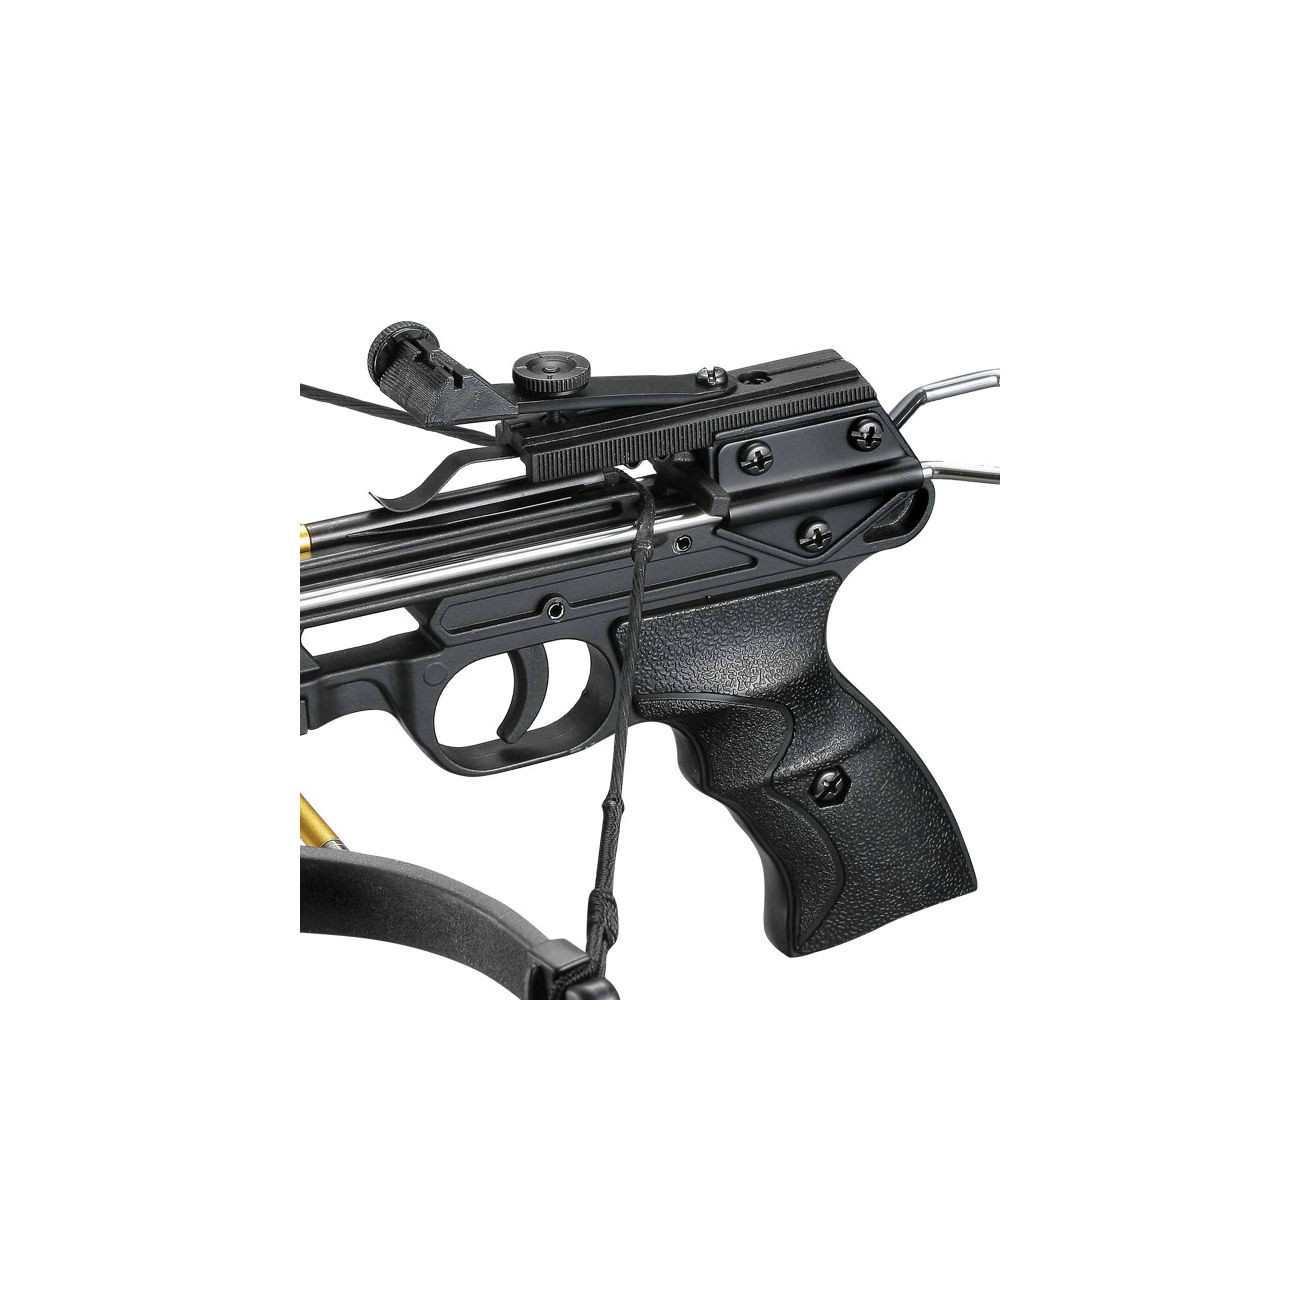 MK Pistolenarmbrust Ninja 80lbs mit Aluminiumschaft und Pfeilhalterung Bild 1